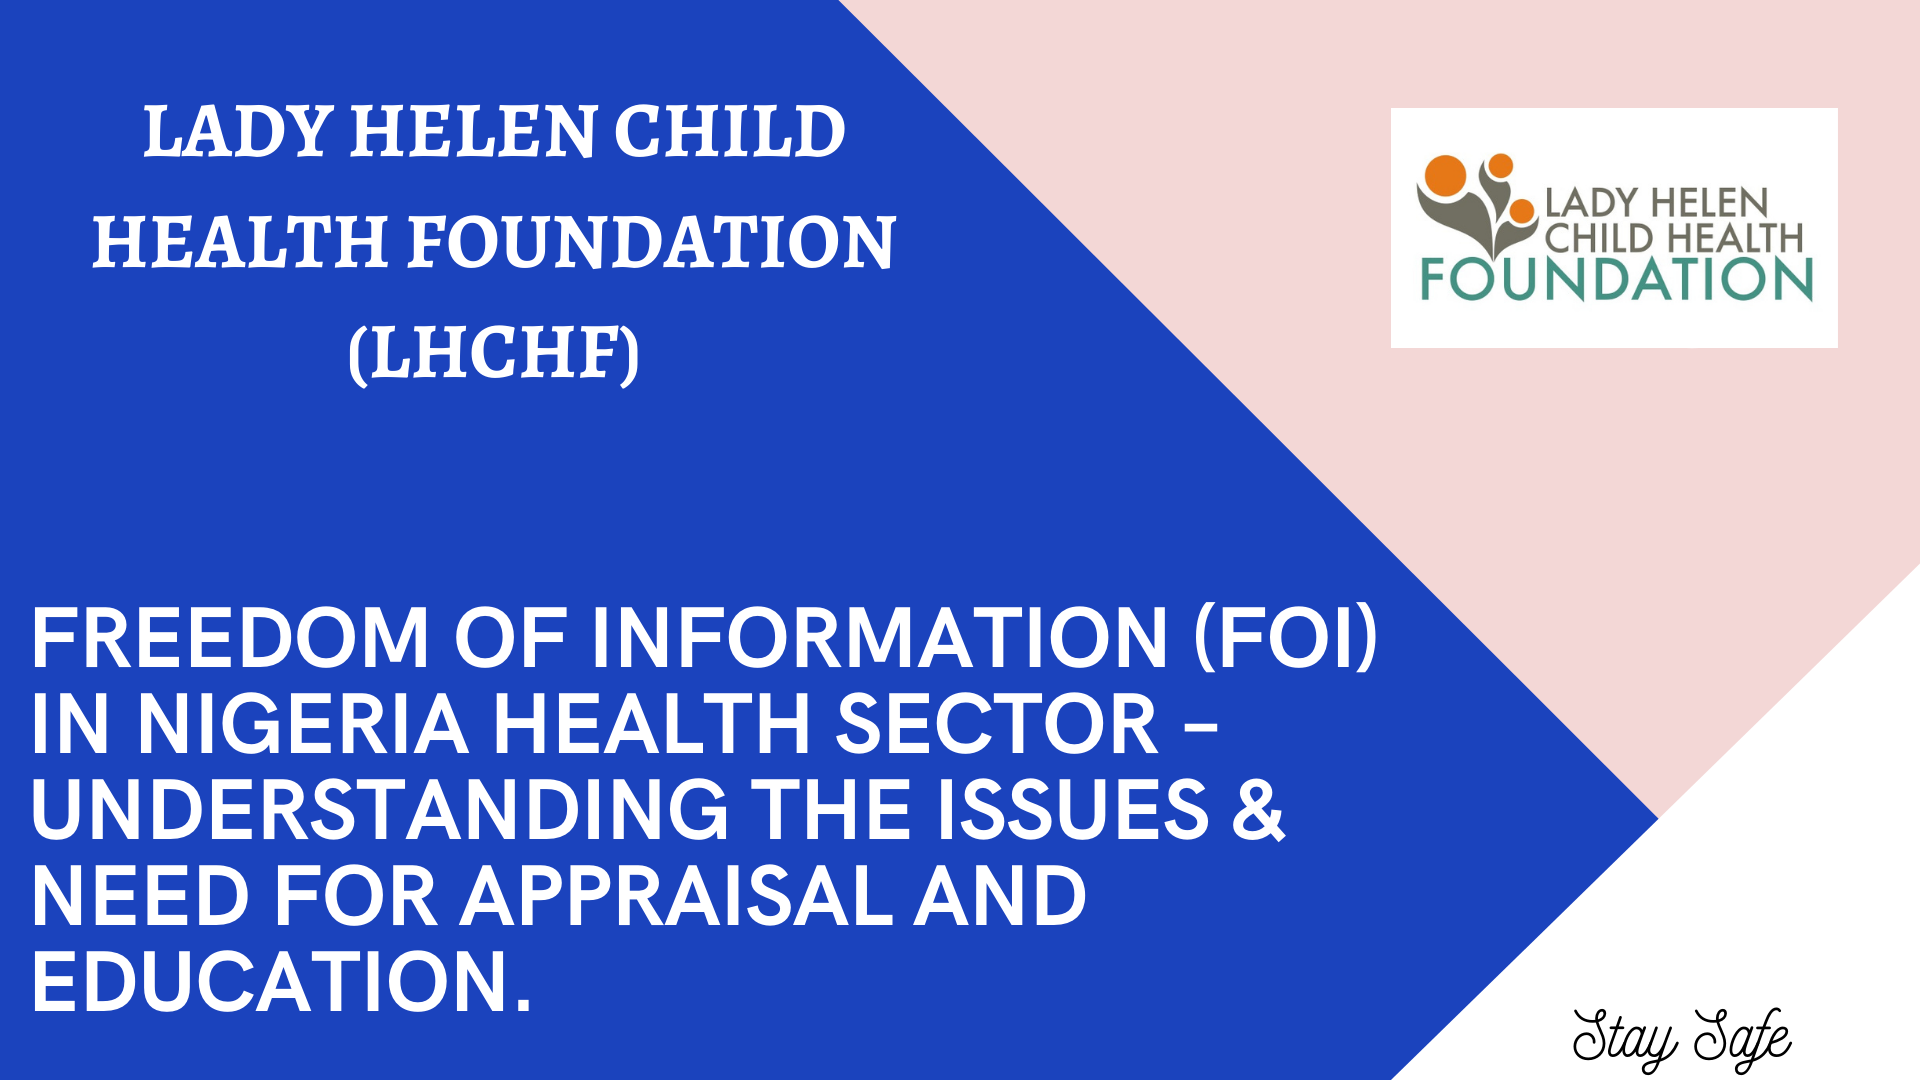 Lady Helen Child Health Foundation